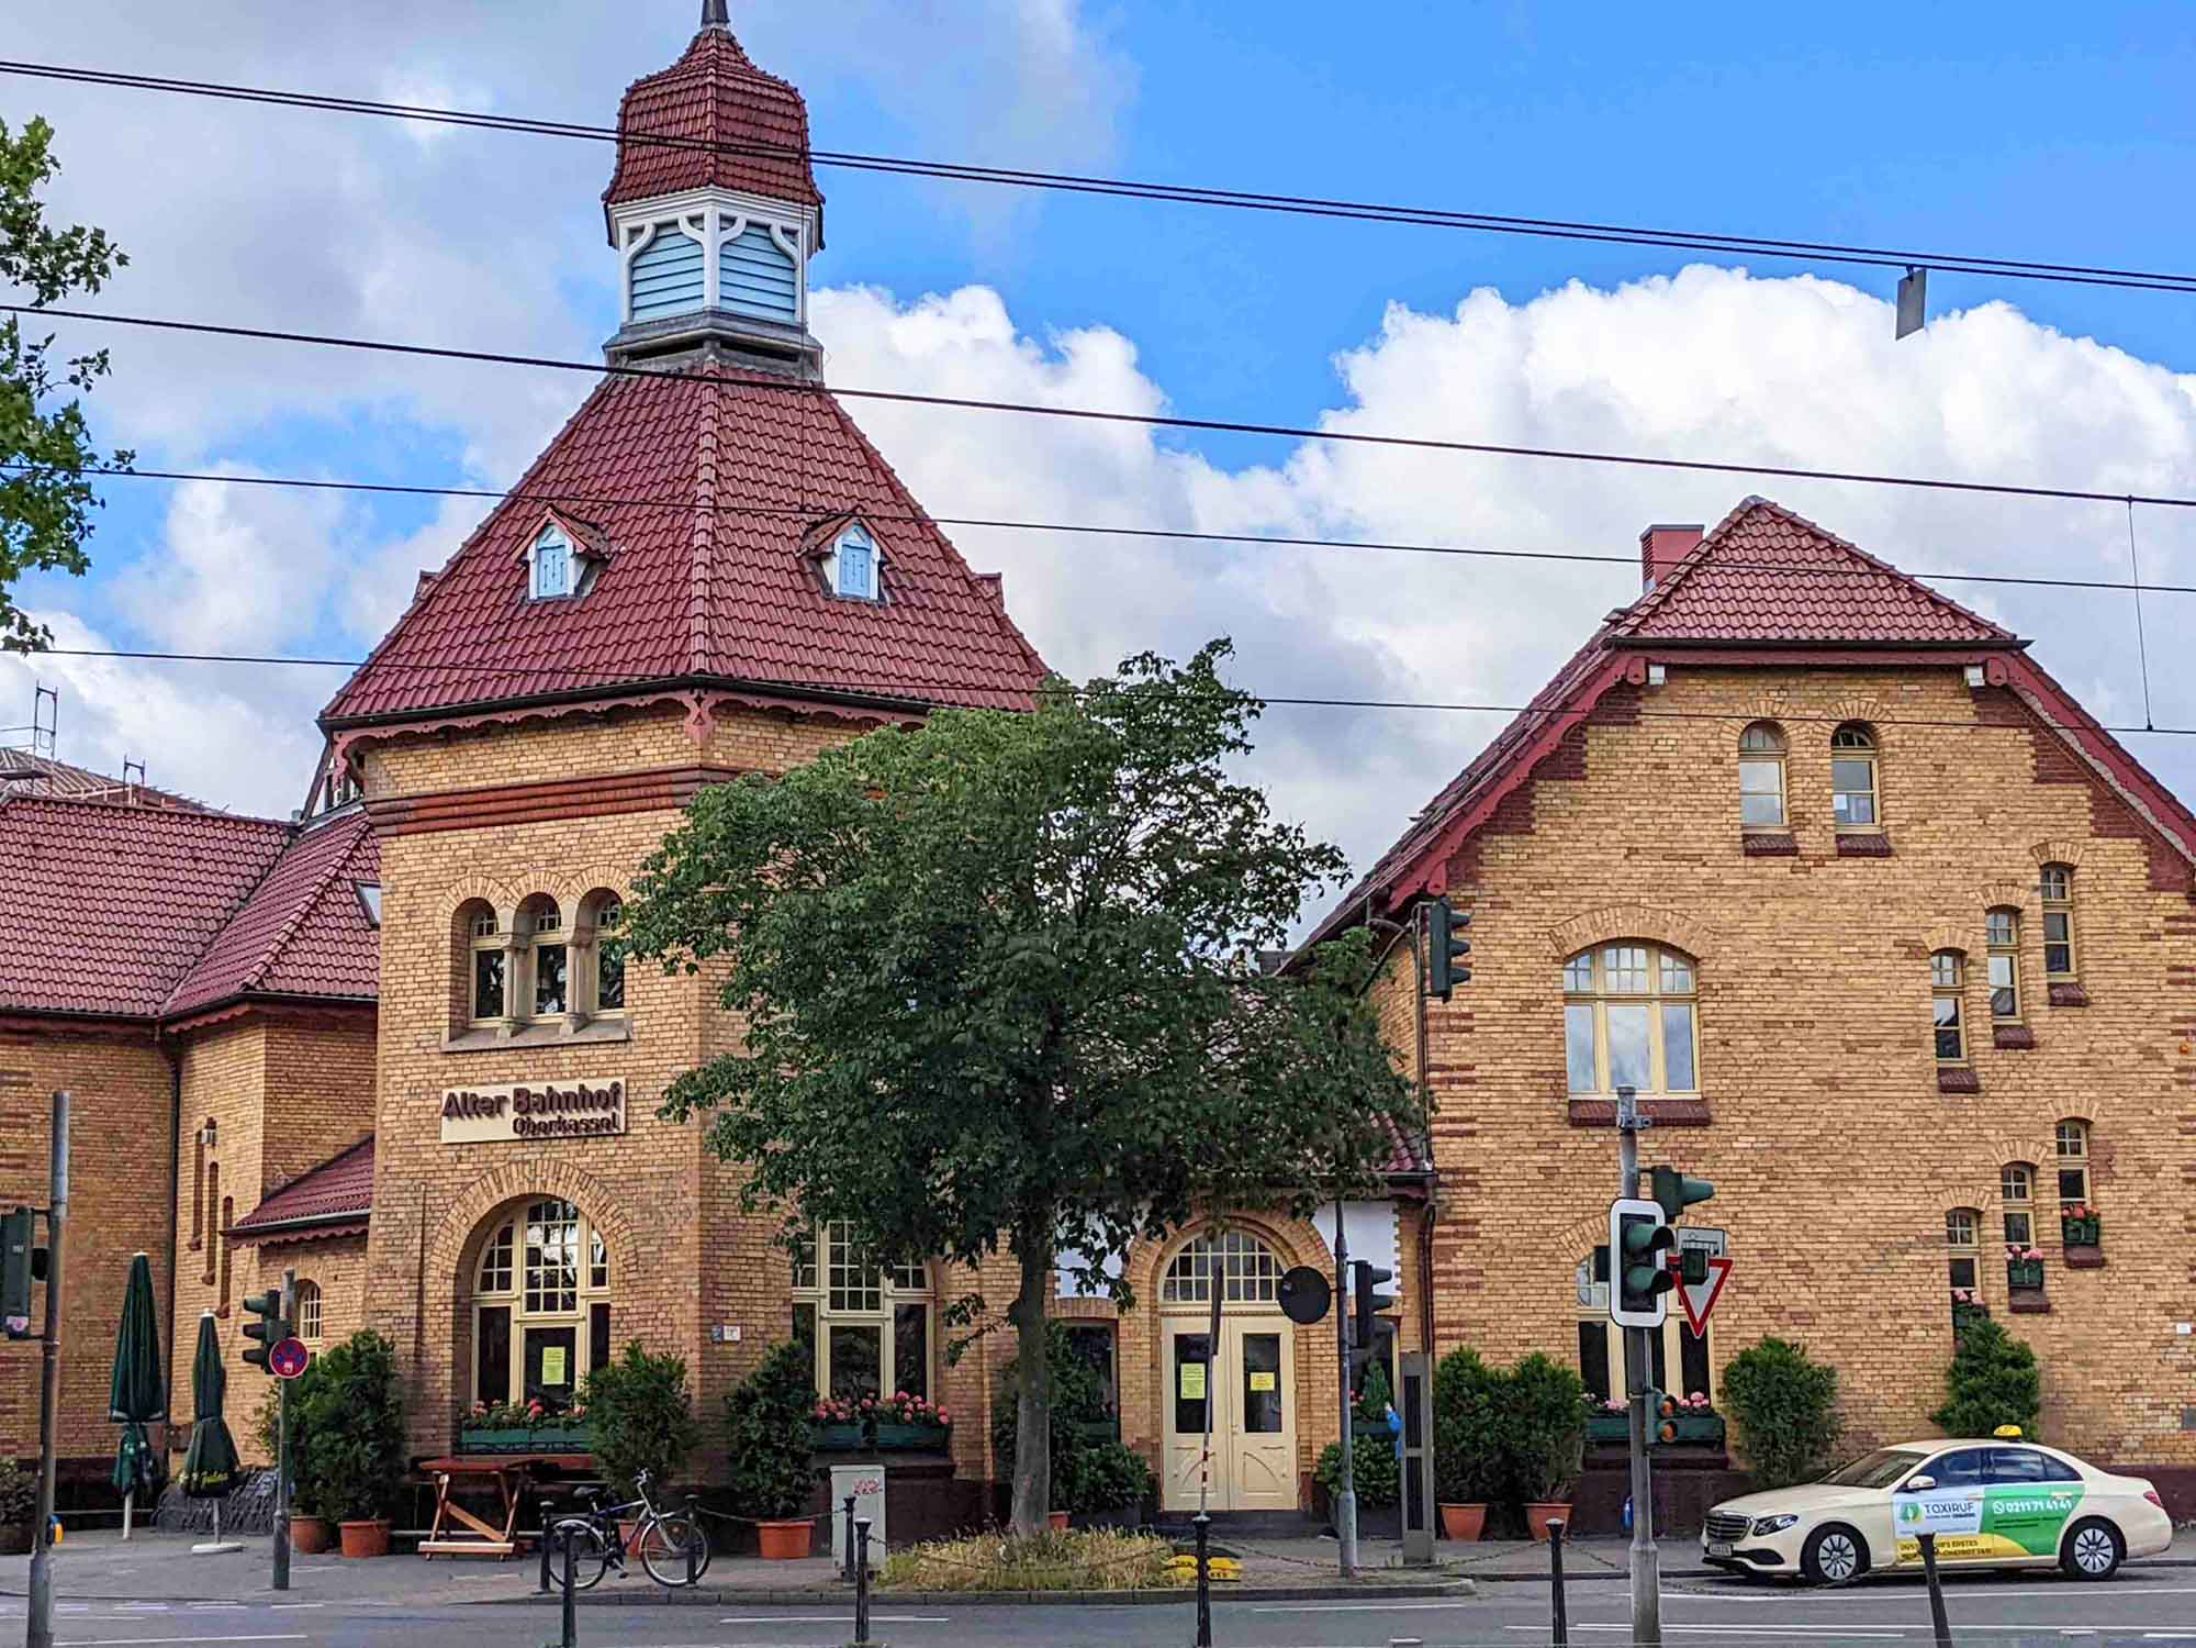 Alter Bahnhof Oberkassel - Best Pubs in Dusseldorf